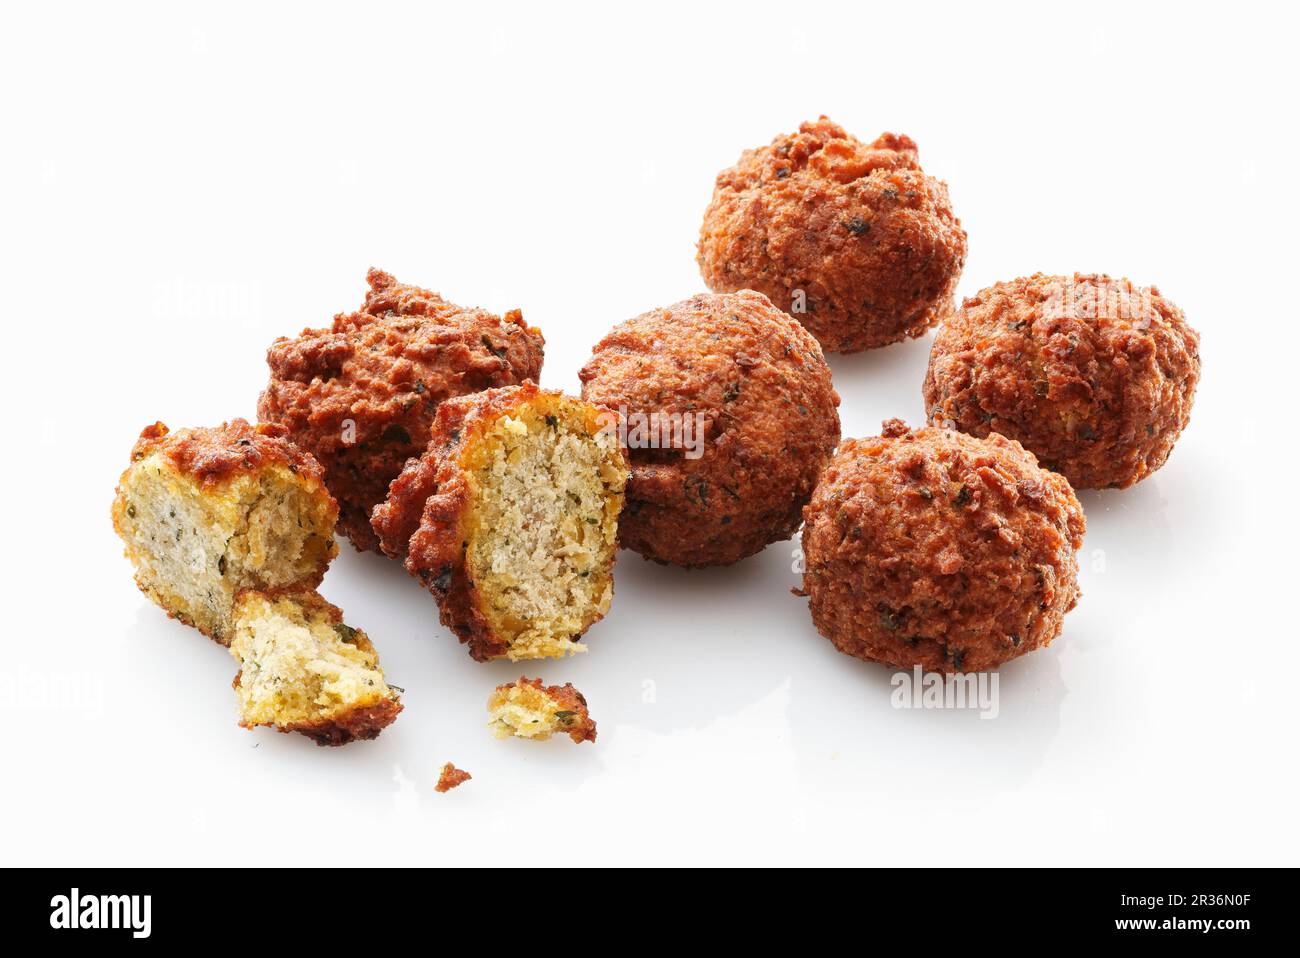 Falafel (chickpea balls, Arabia) Stock Photo